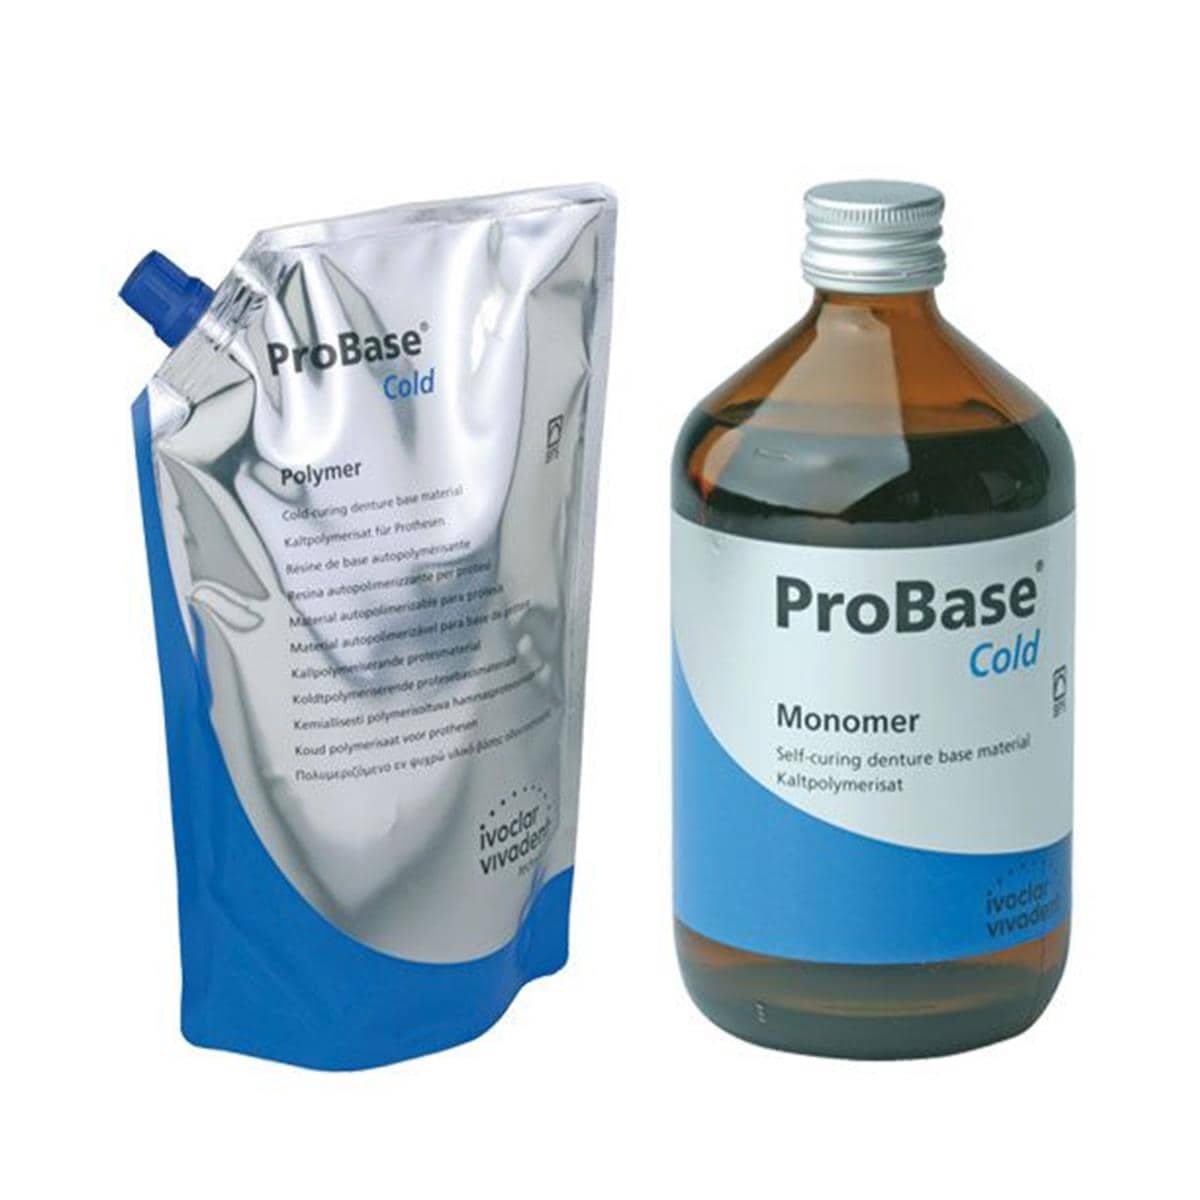 Probase Cold IVOCLAR - La portion de 1 kg + 500 ml - Prfrence